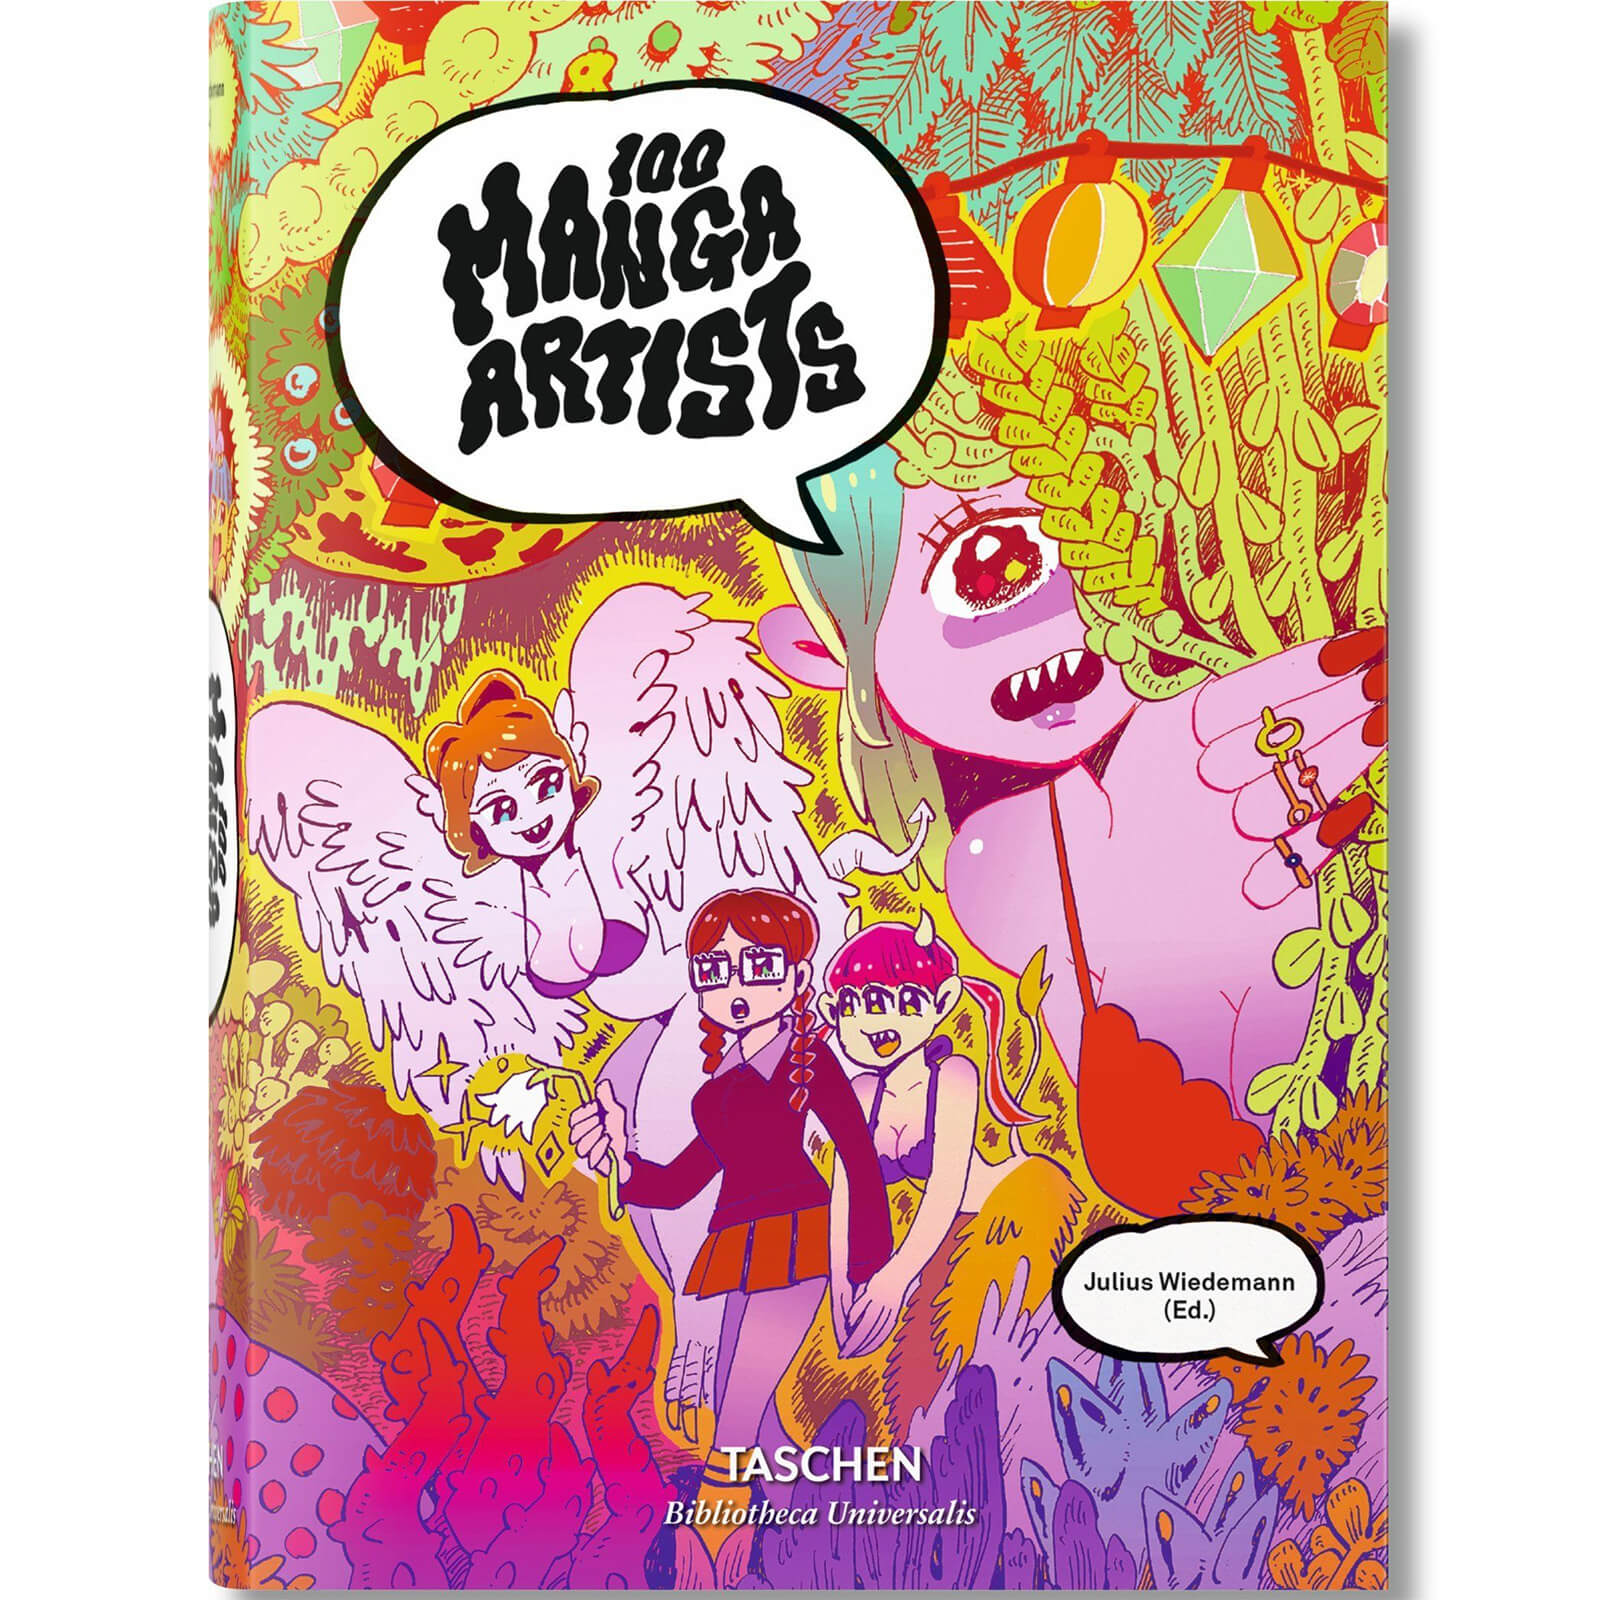 Taschen 100 manga artists (hardback)